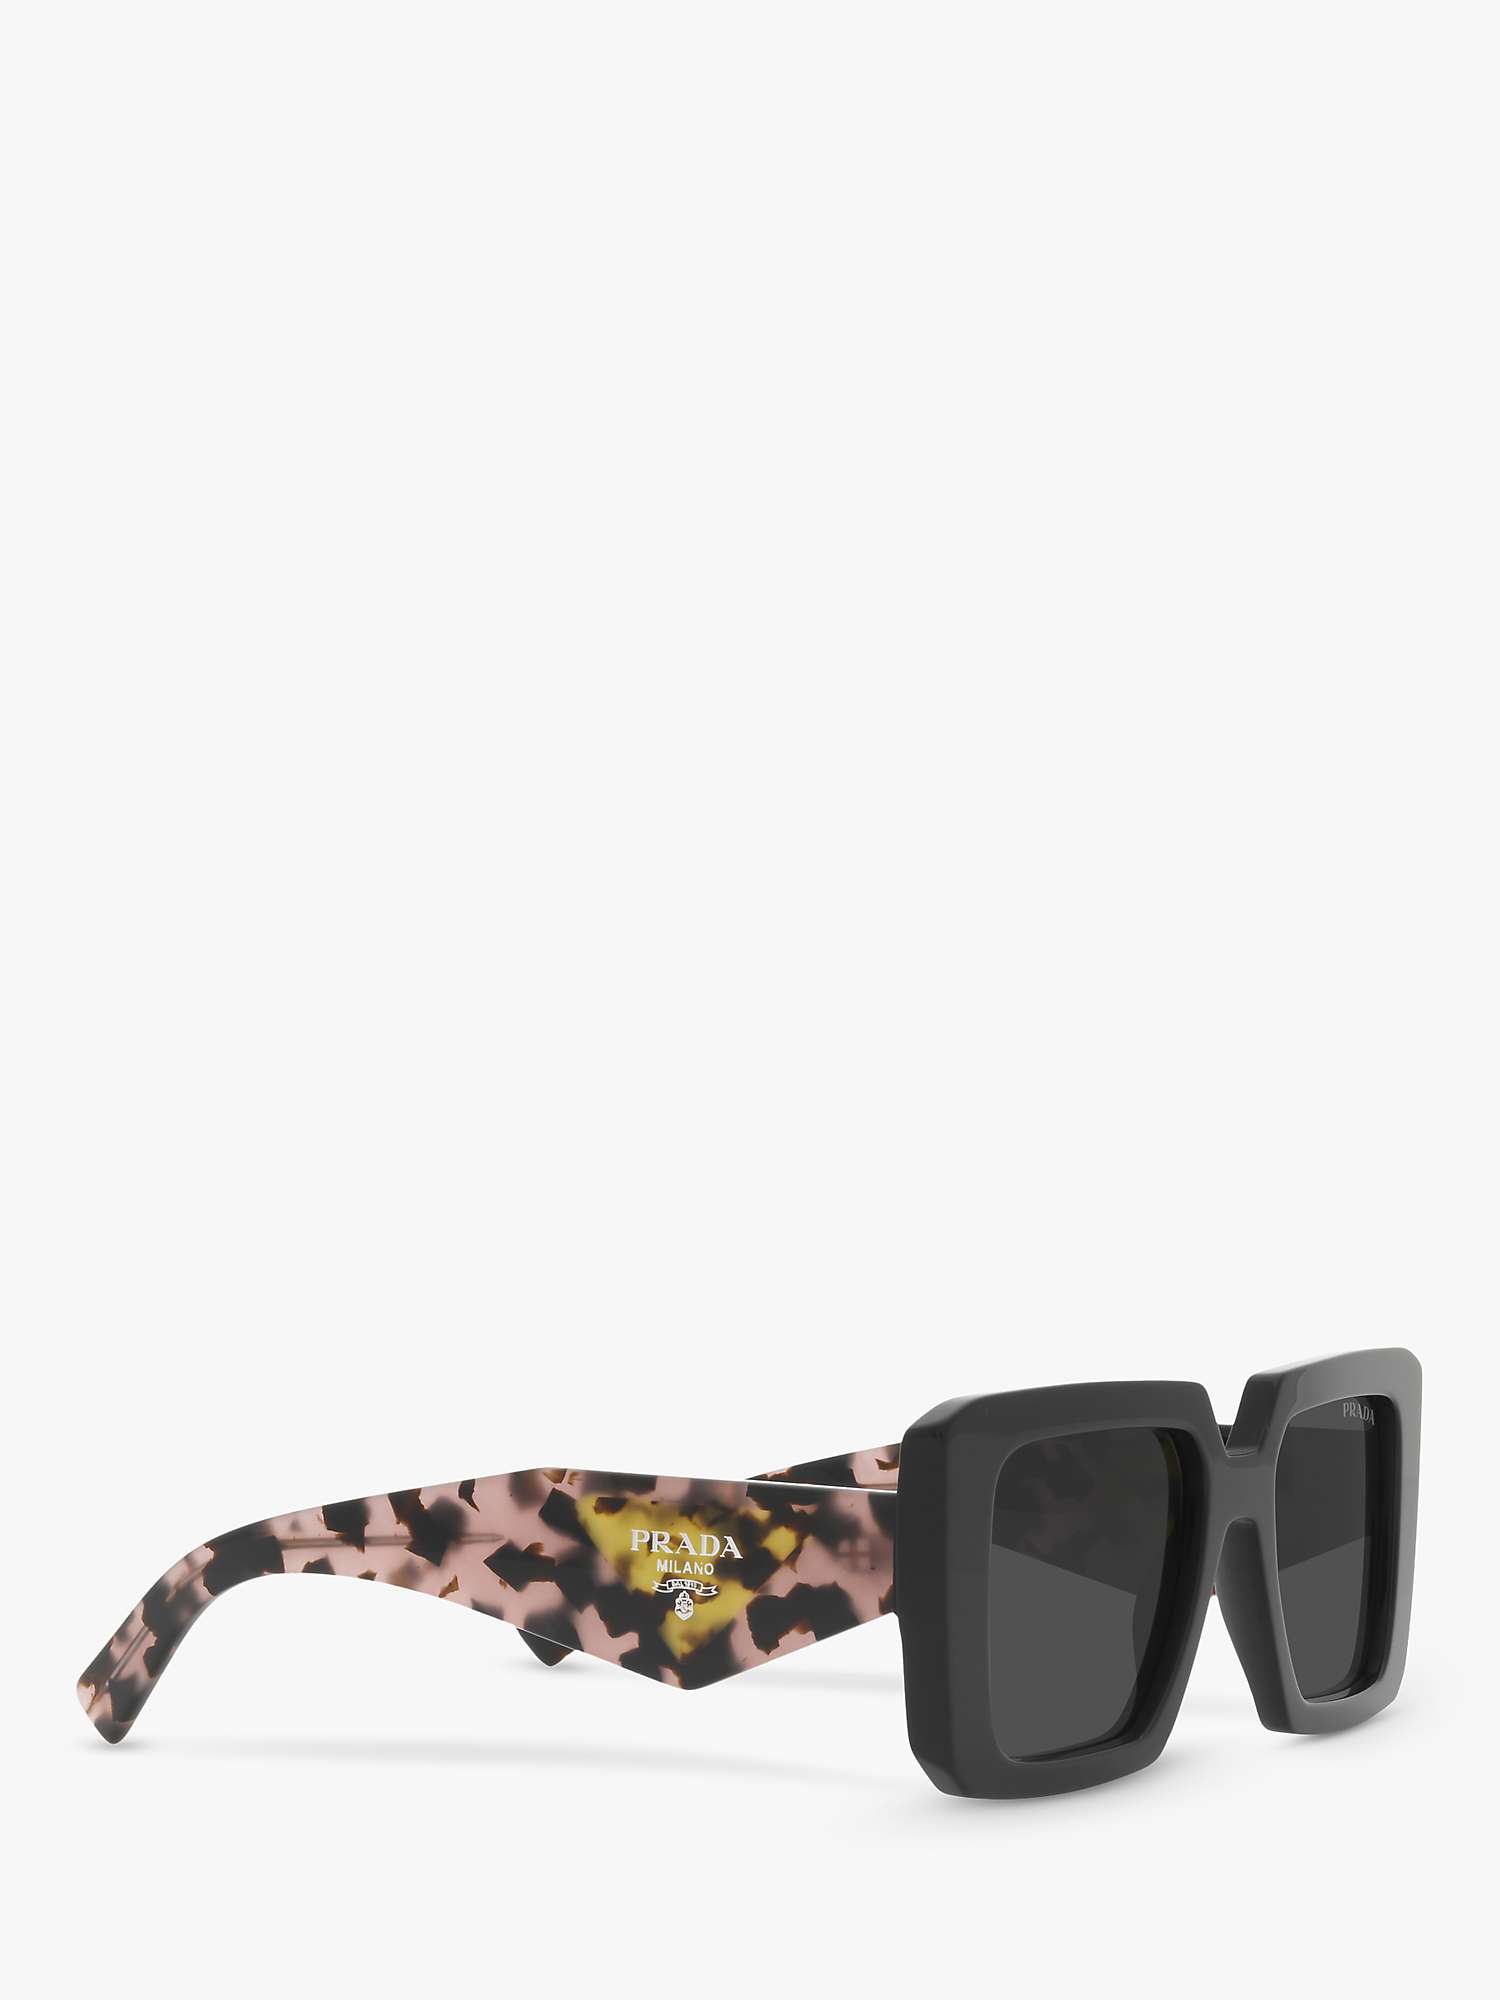 Buy Prada PR 23YS Women's Chunky Square Sunglasses Online at johnlewis.com